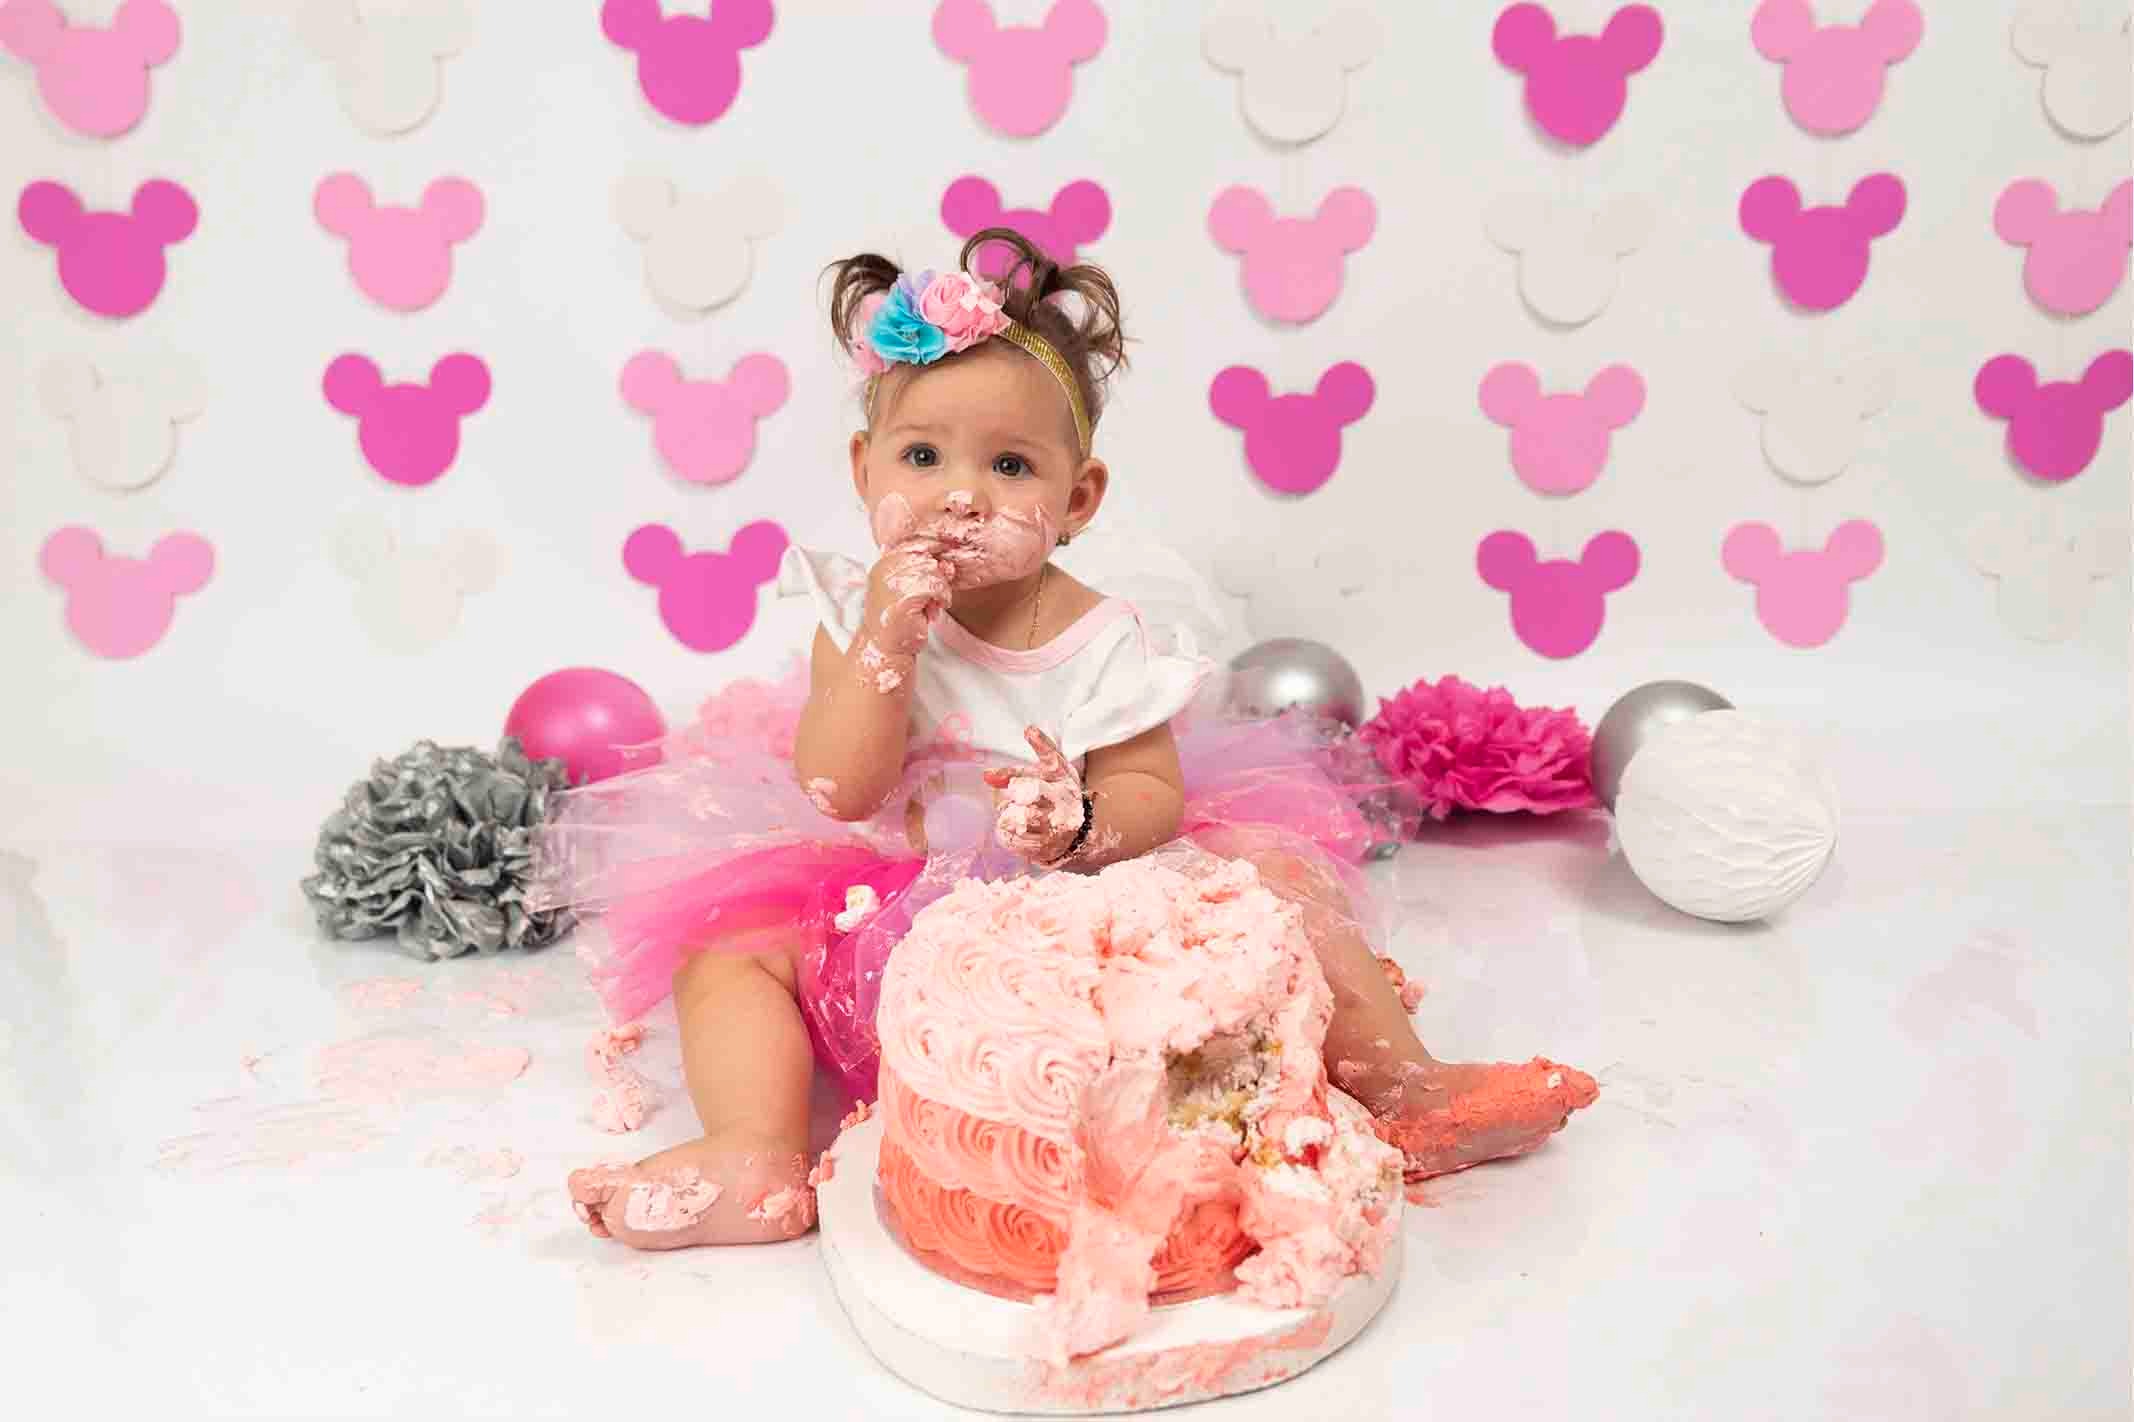 Cake smash photographer with girl tastig cake